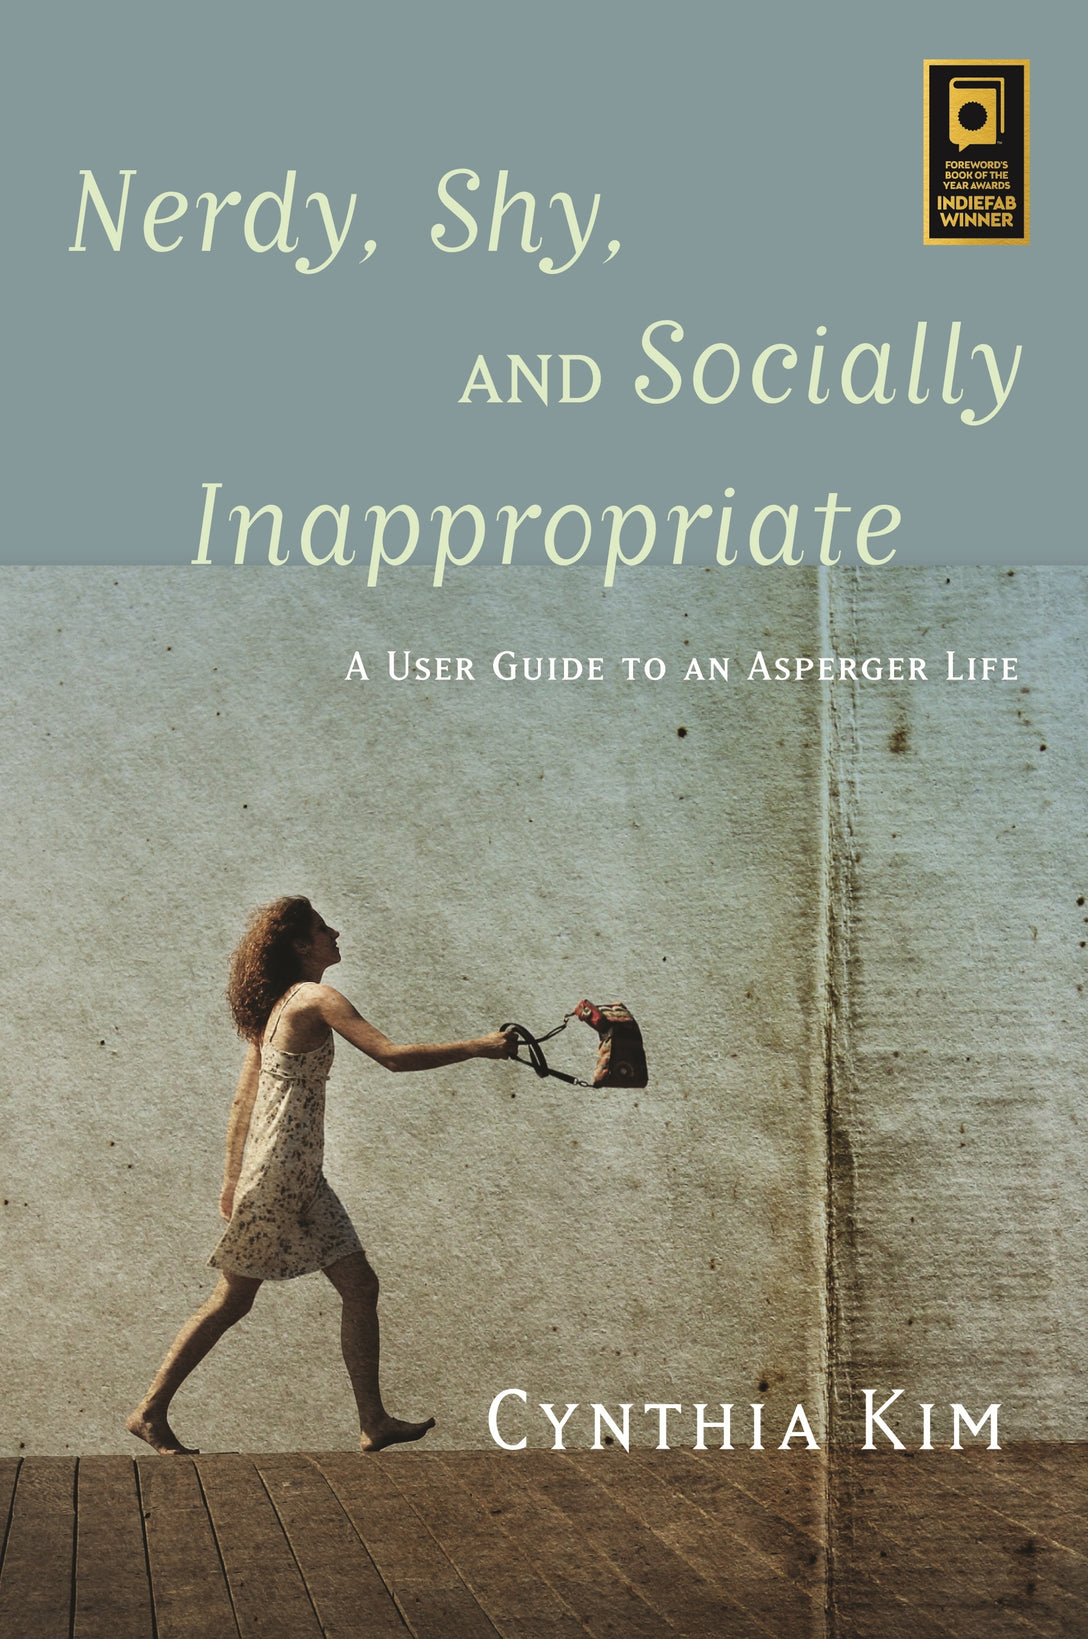 Nerdy, Shy, and Socially Inappropriate by Cynthia Kim